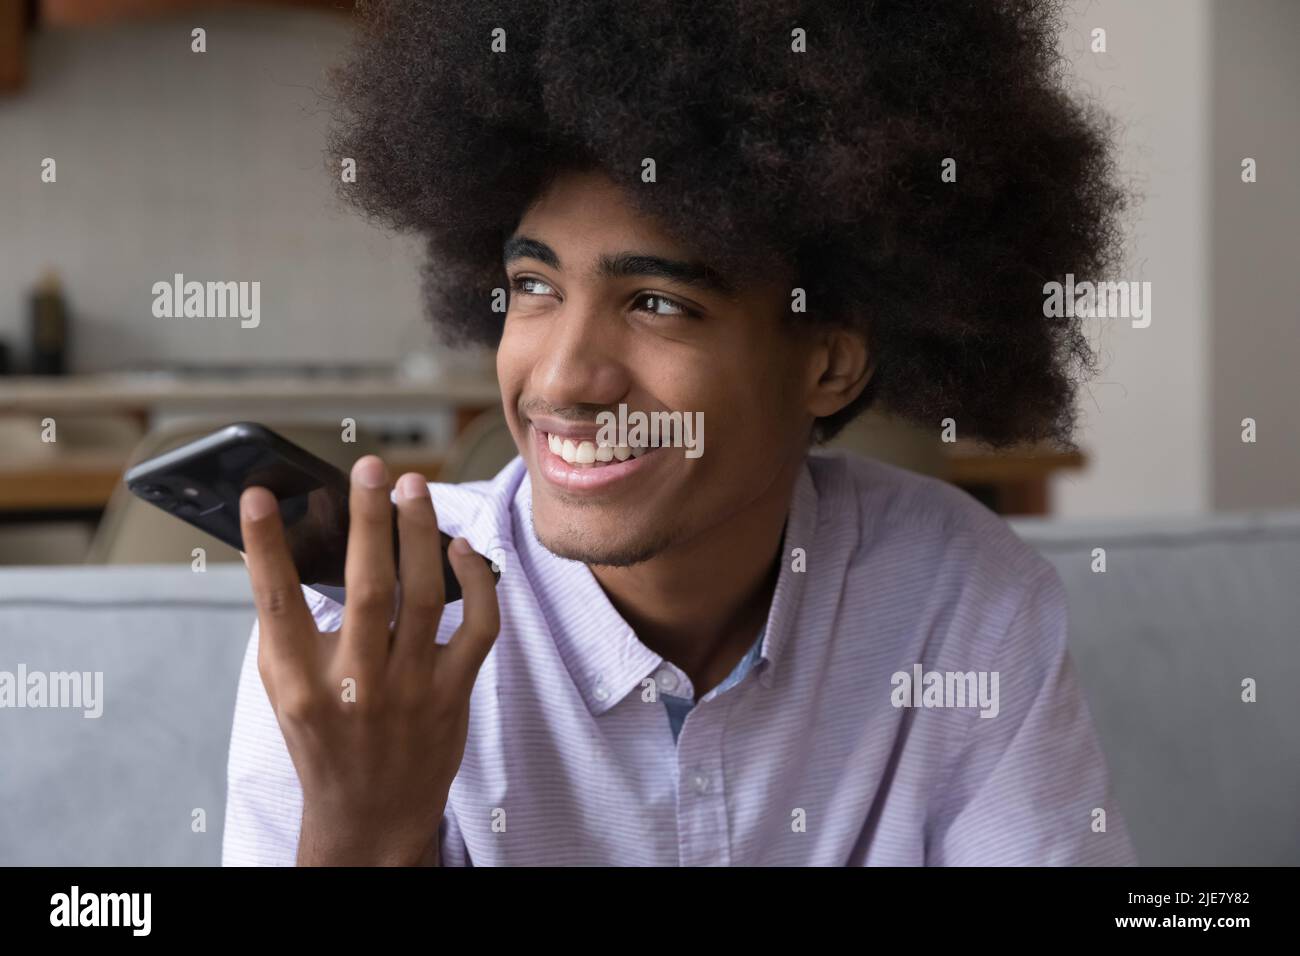 African guy holds smartphone make call speaking on speaker phone Stock Photo